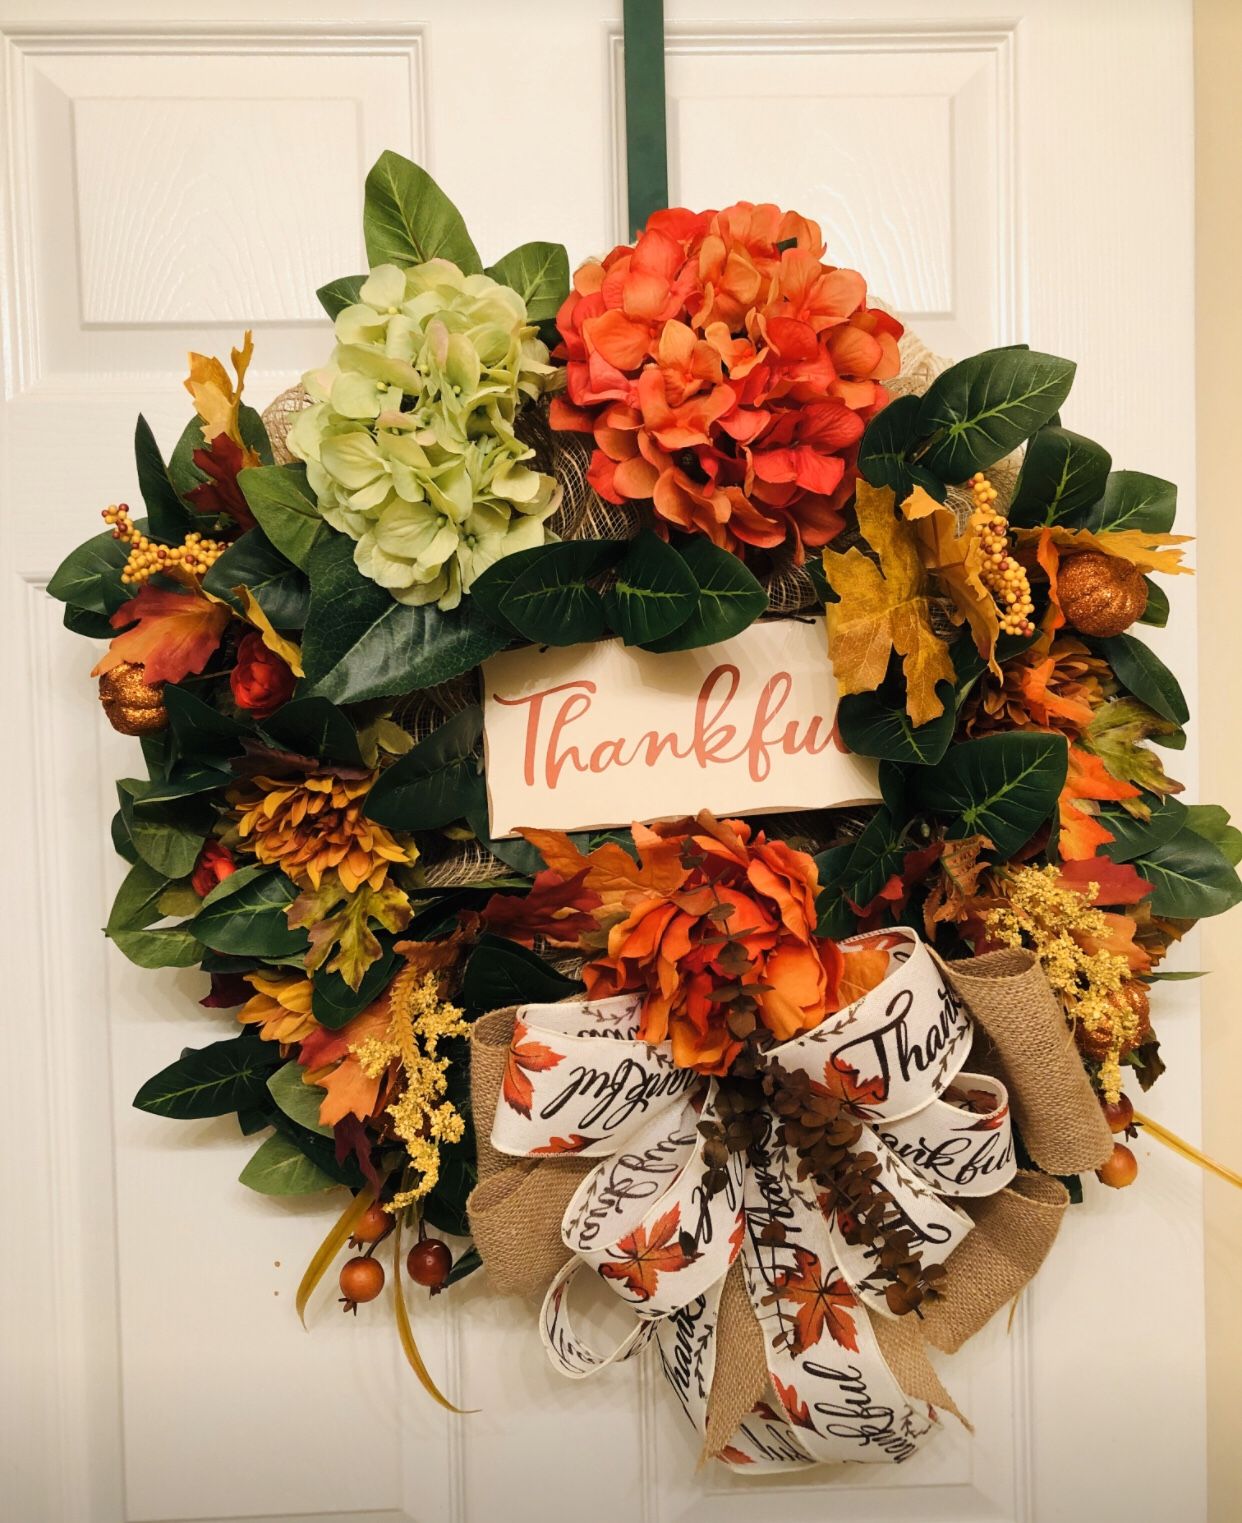 Thankful wreath